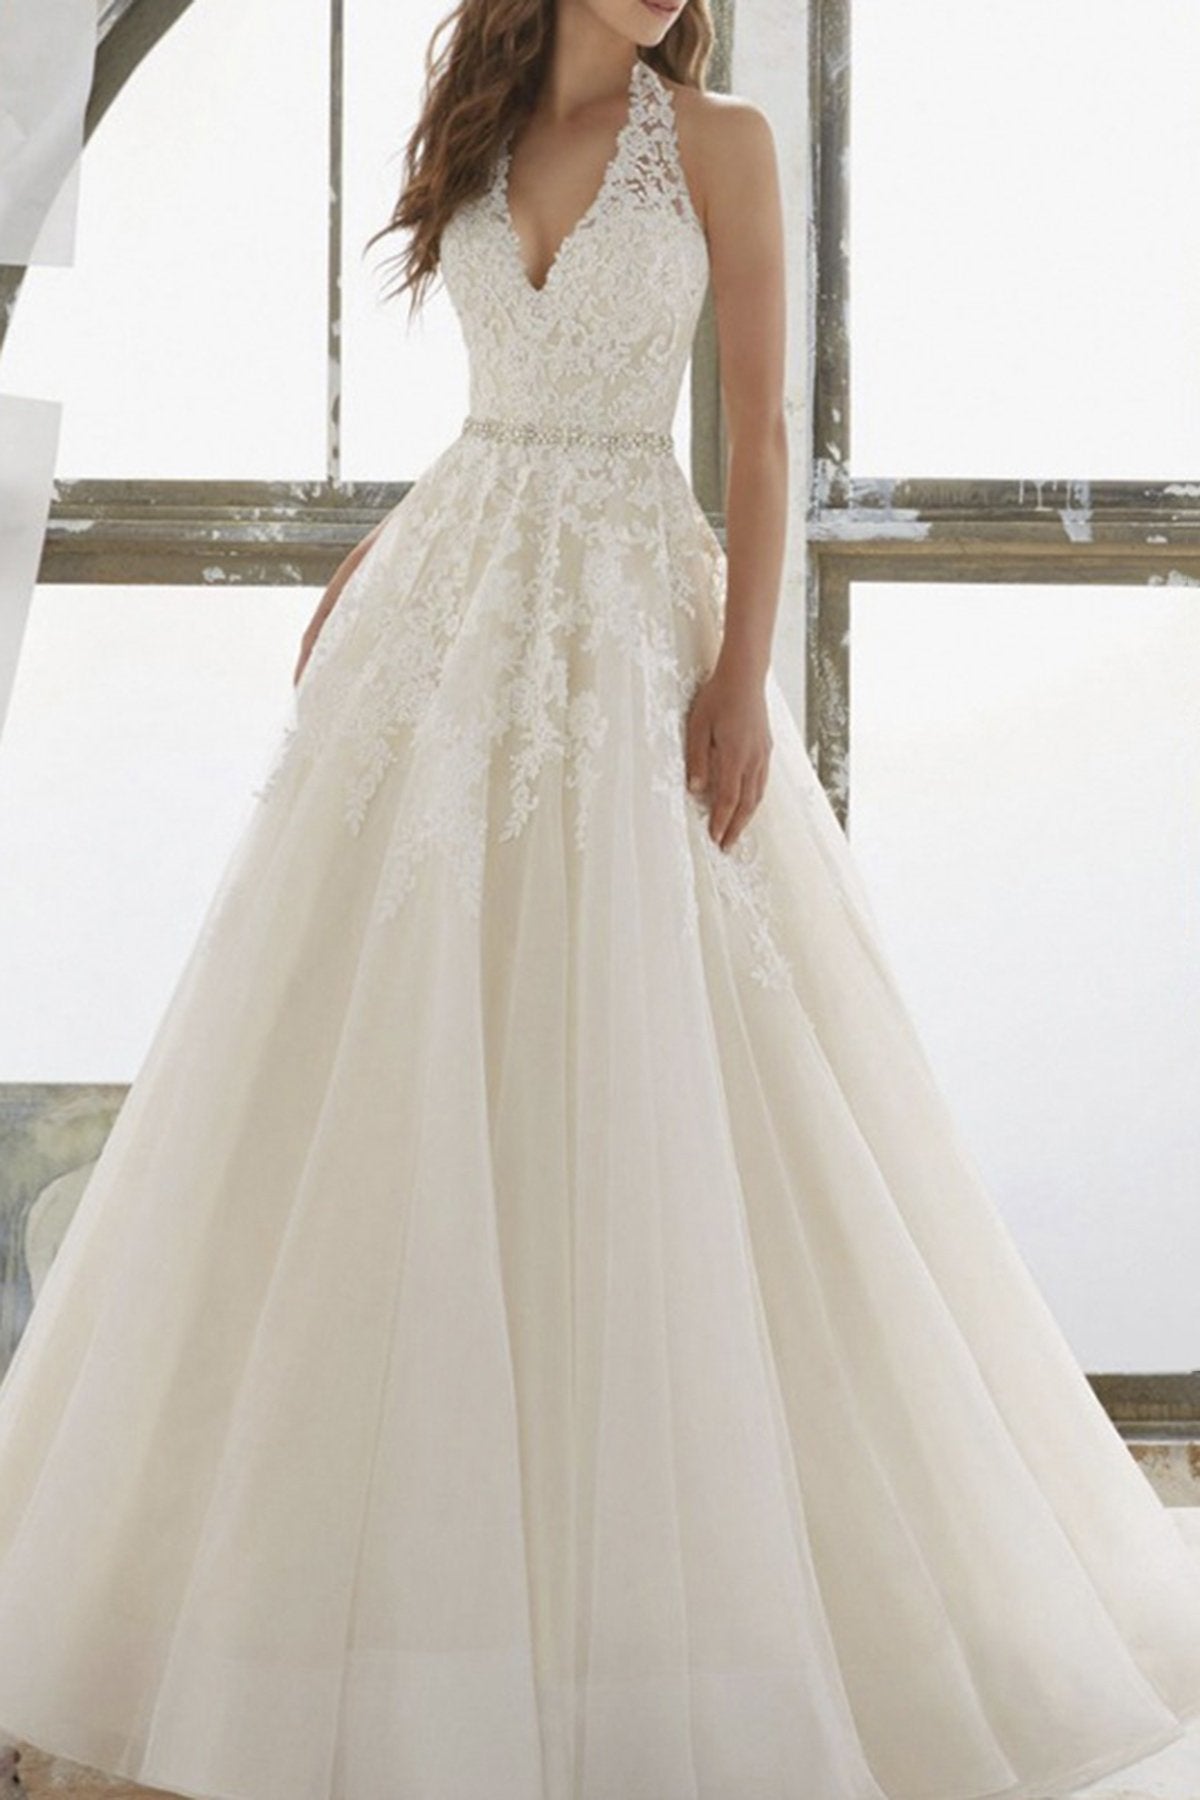 halter style bridesmaid dresses